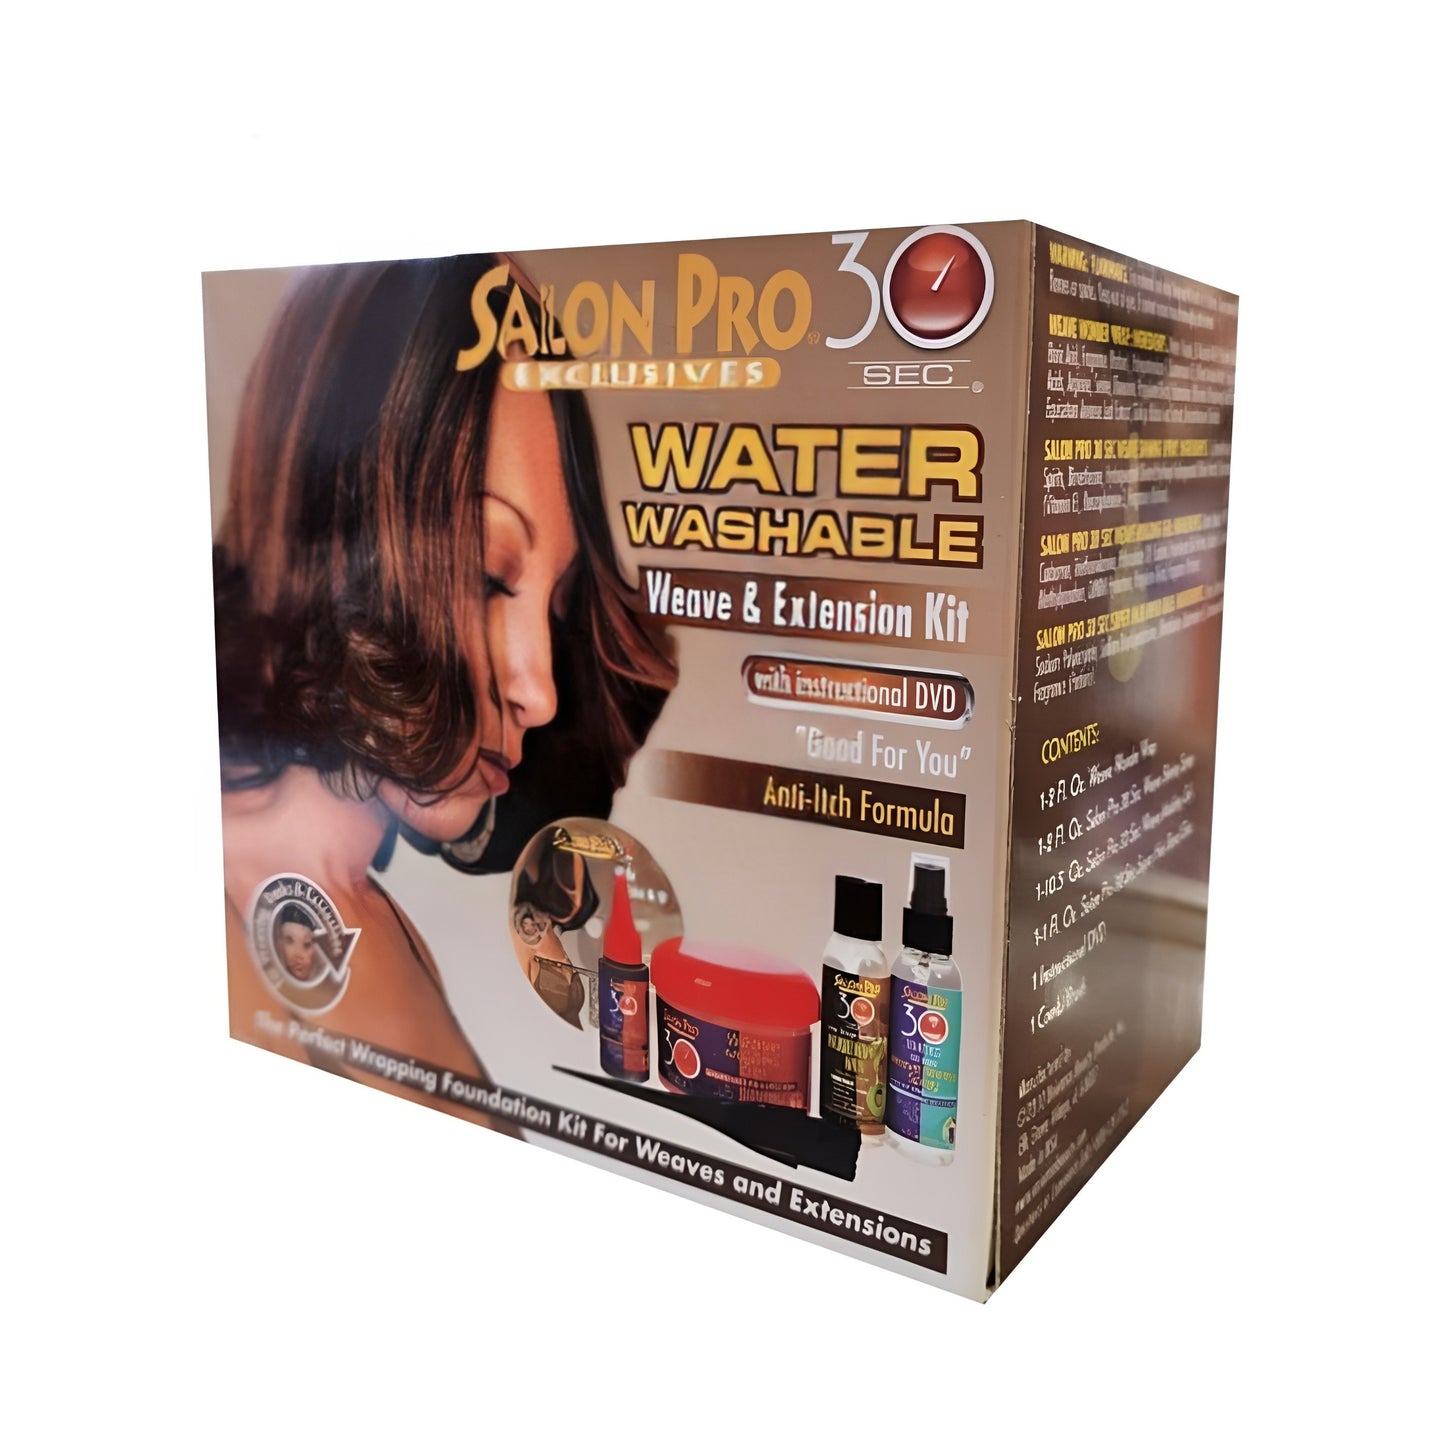 Salon Pro 30 Water Washable | Weave & Extension Kit